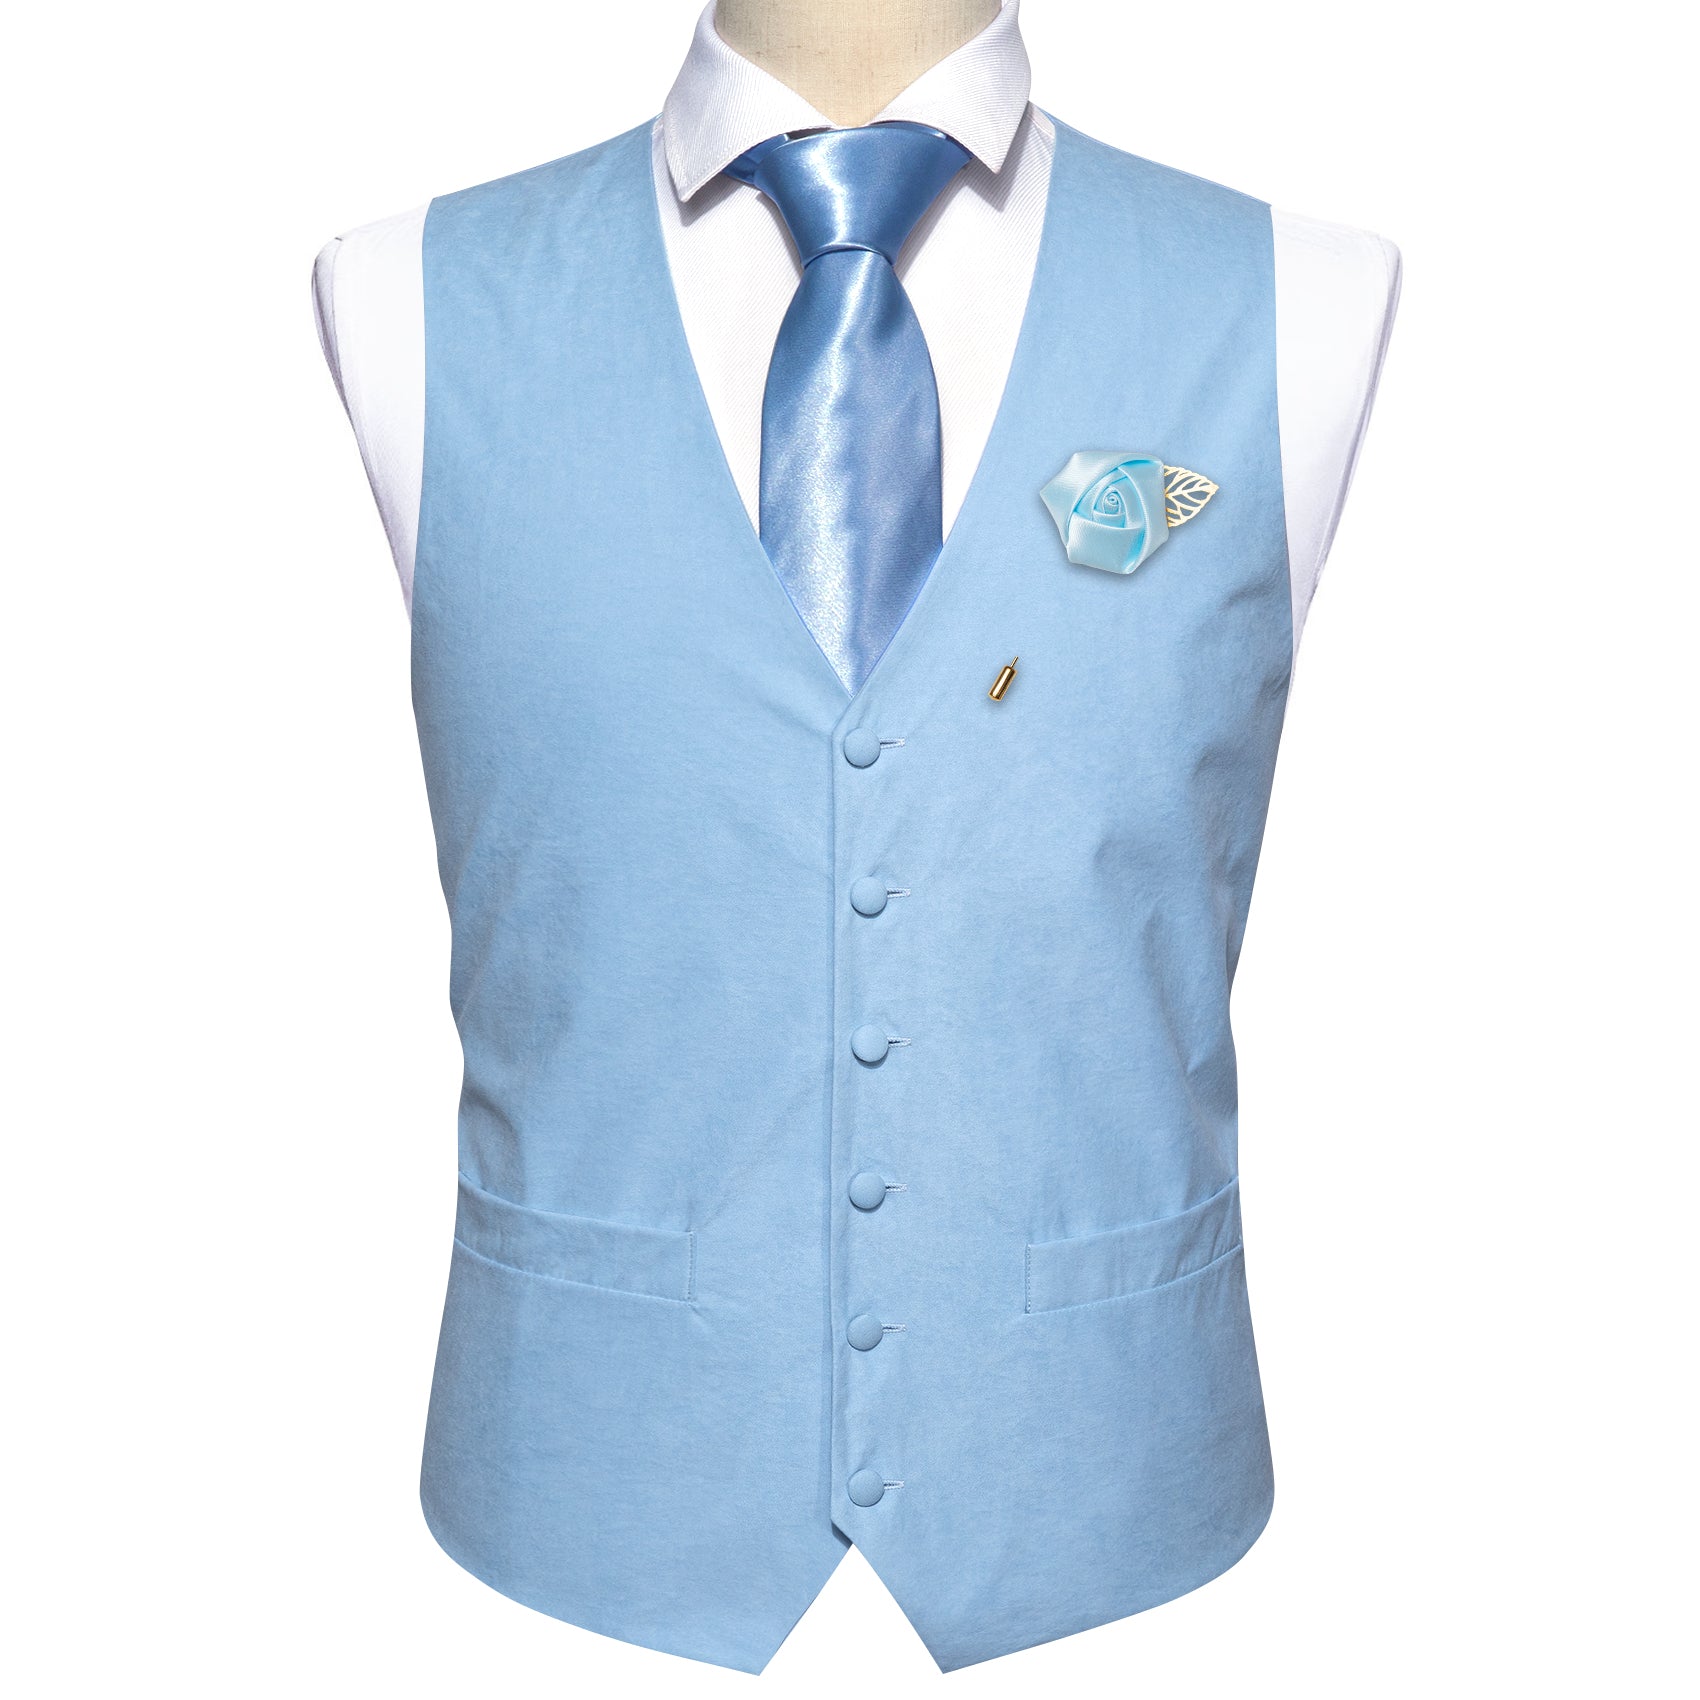 Barry.wang Men's Vest Pale Blue Solid Silk Waistcoat Vest with Lapel Pin